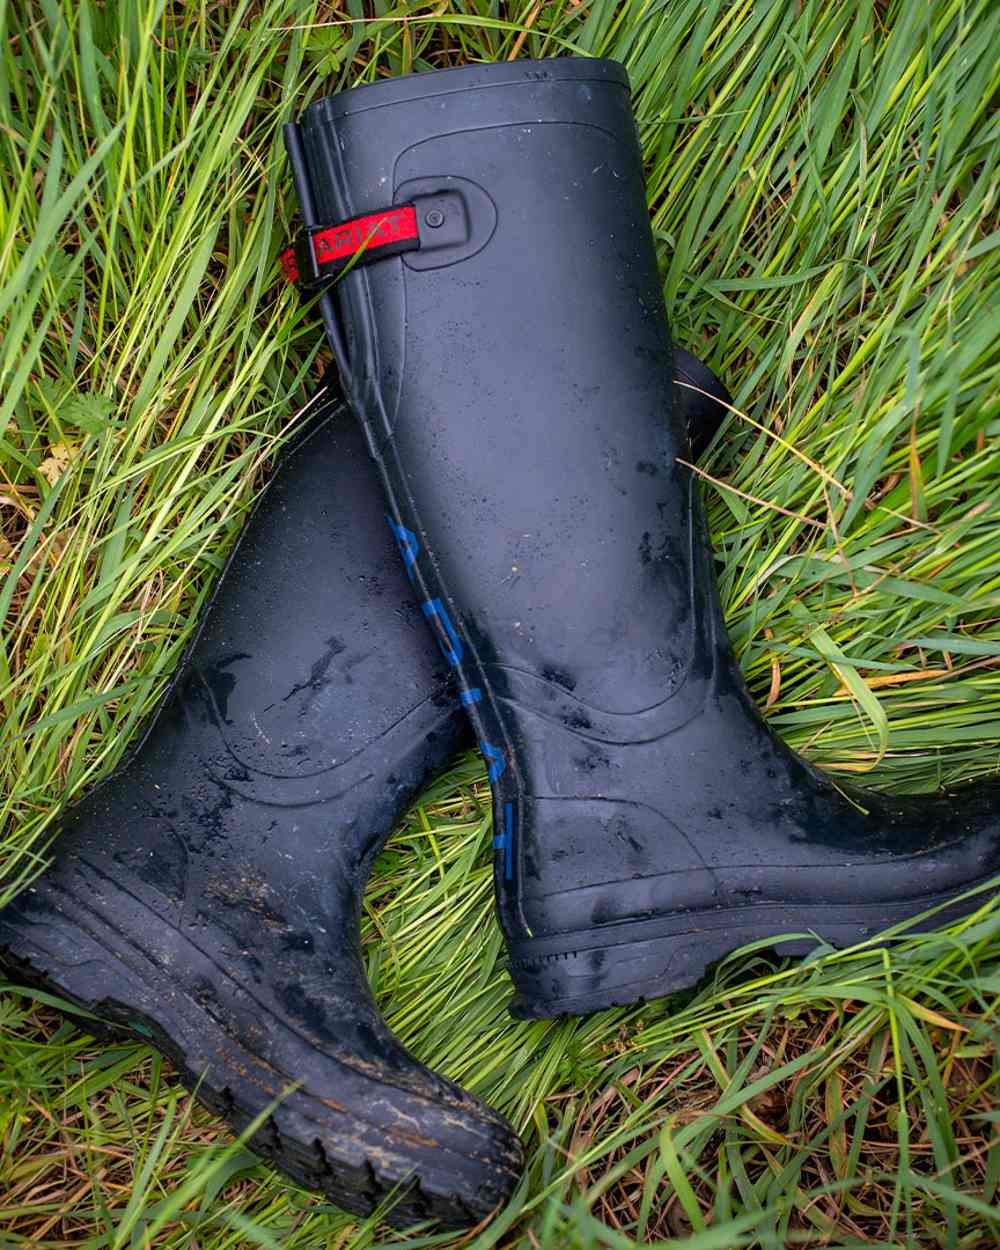 Navy coloured Ariat Womens Kelmarsh Wellington Boots on Grassy background 